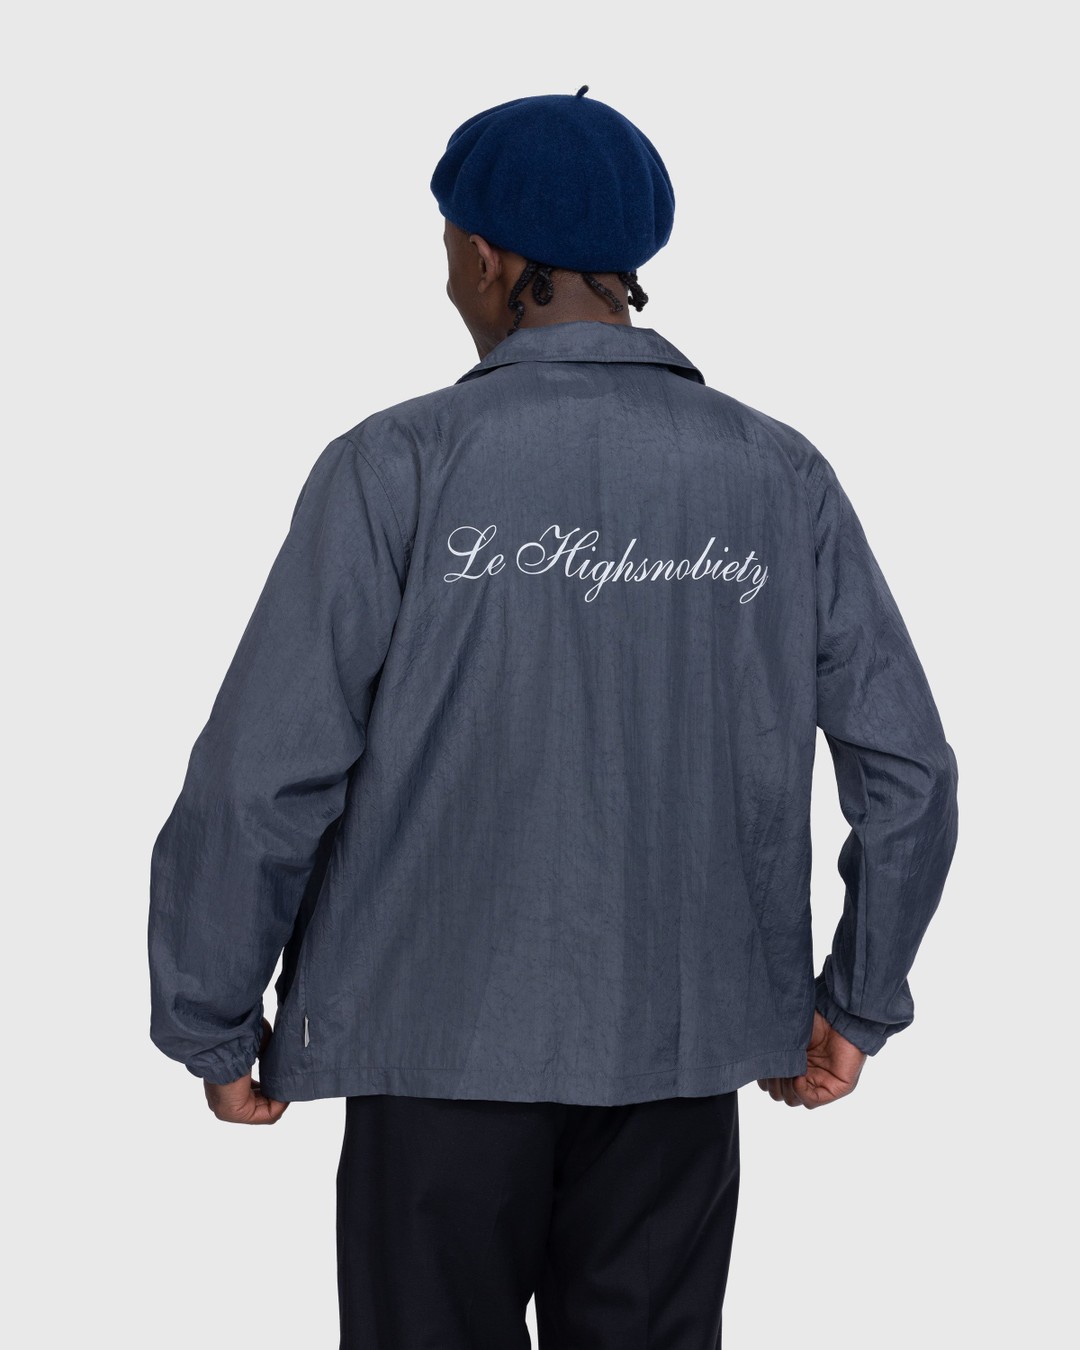 Highsnobiety – Not in Paris 5 Coach Jacket - Outerwear - Grey - Image 4